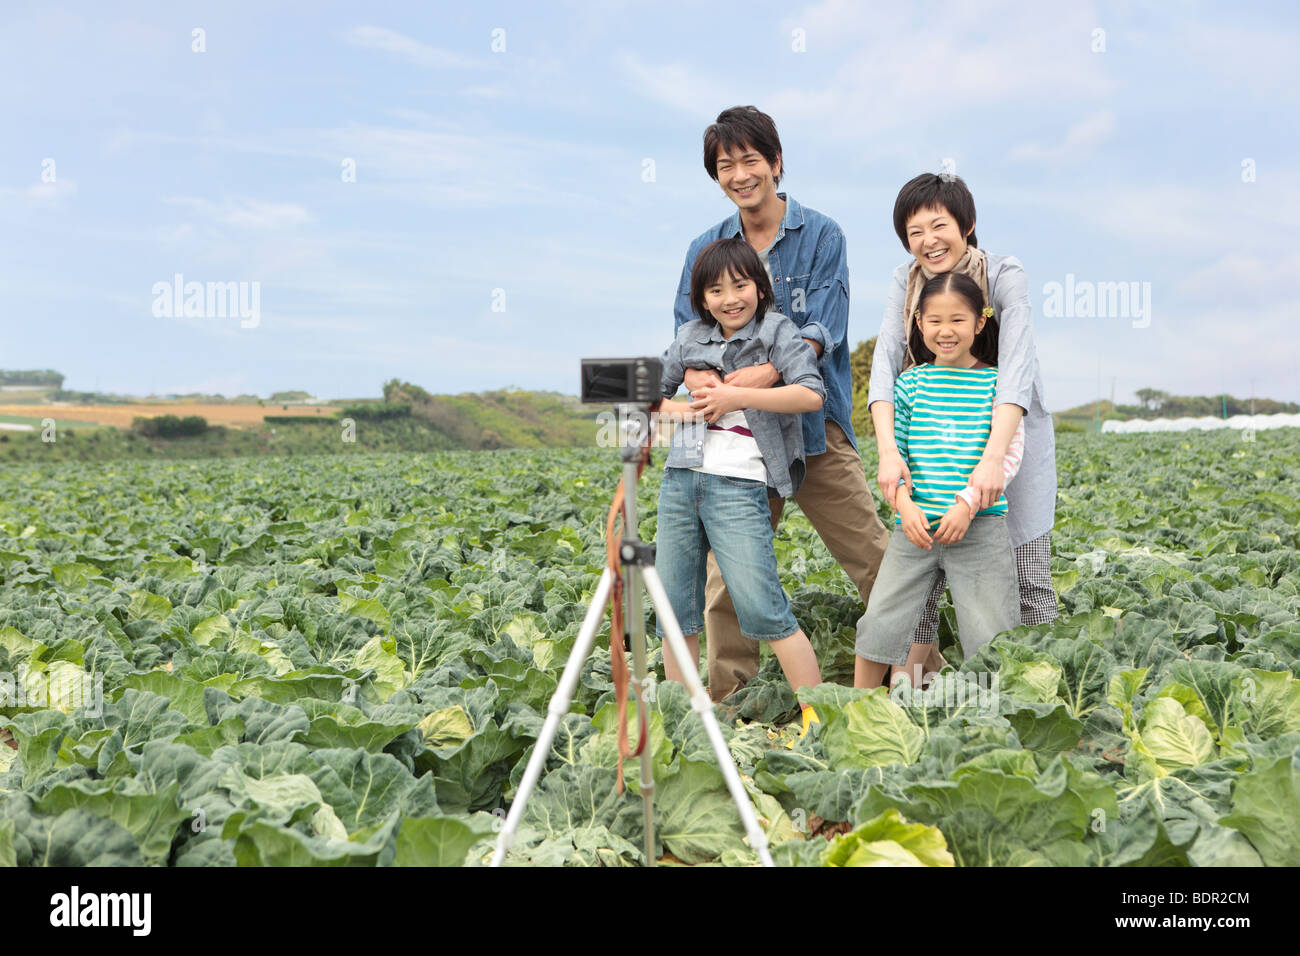 Family taking memorable photograph in field Stock Photo